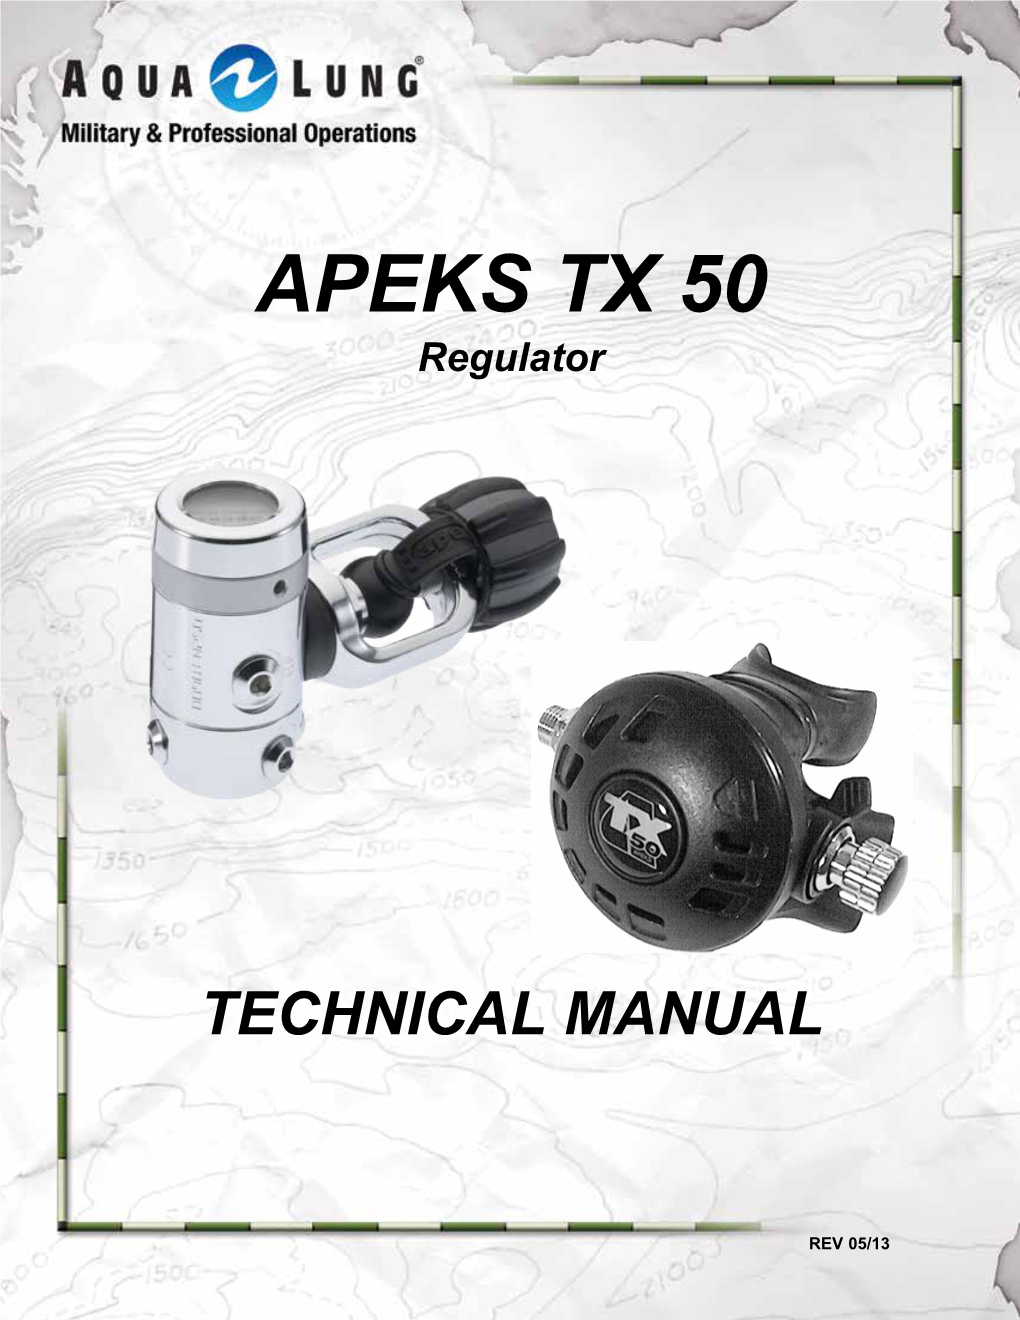 APEKS TX 50 Regulator